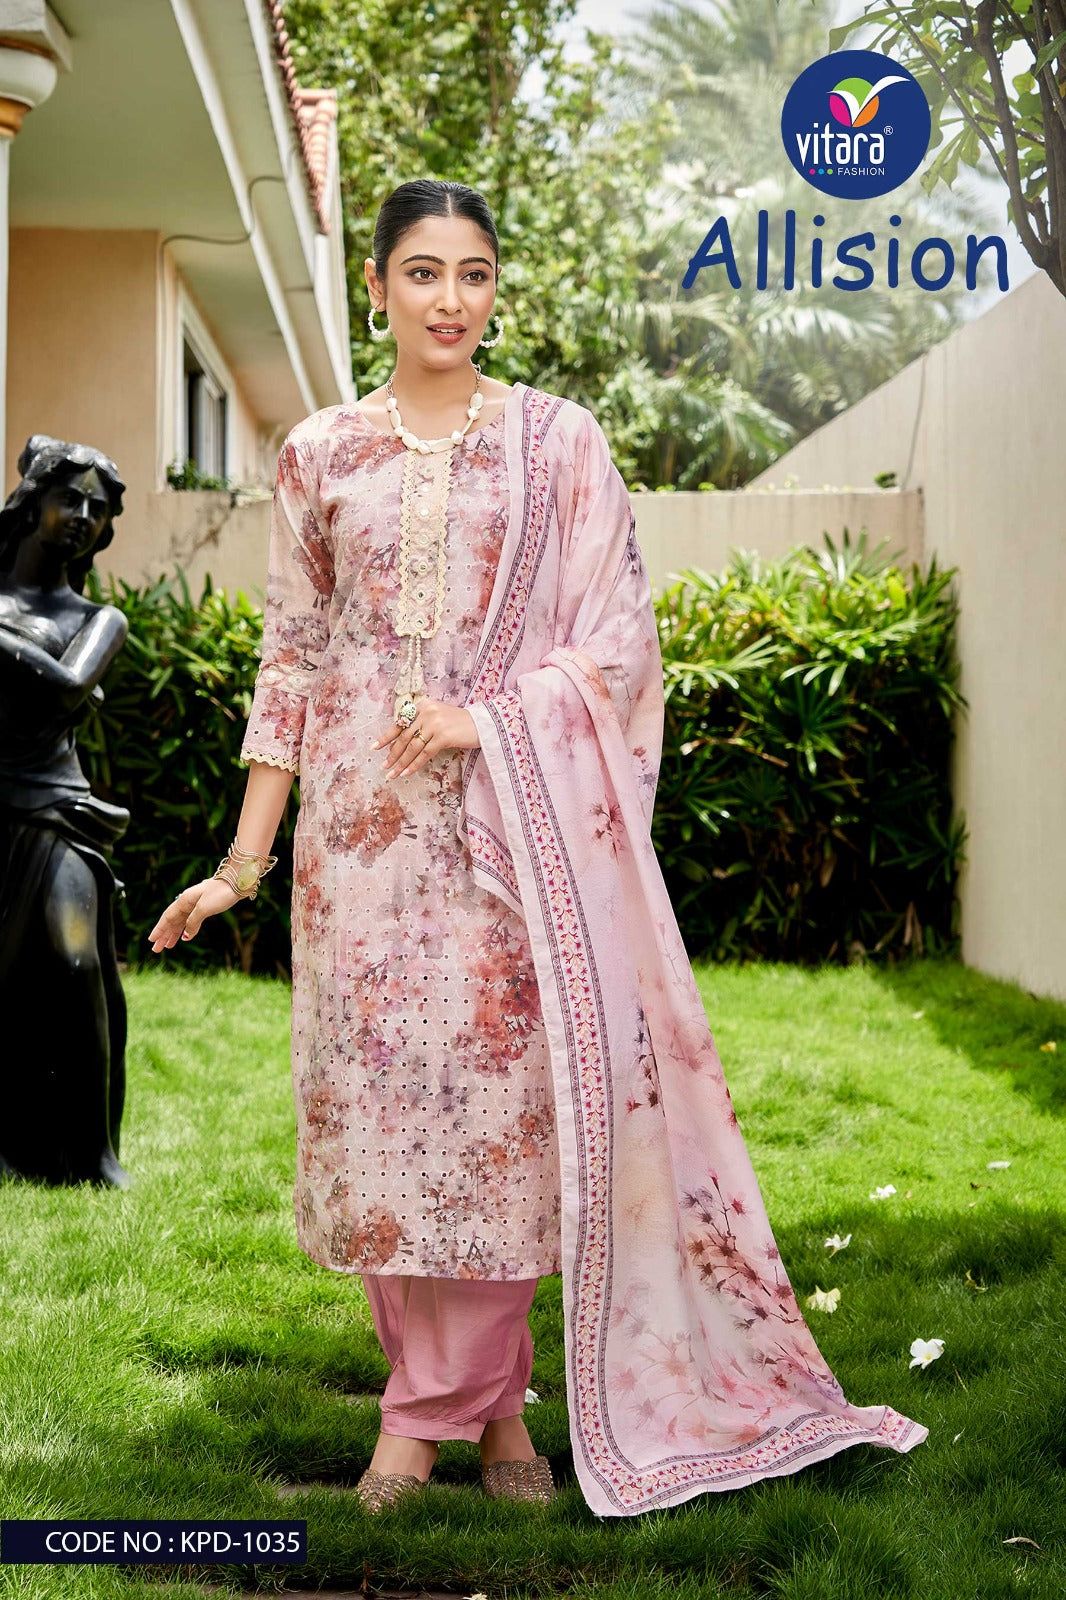 Alision Vitara Readymade Salwar Suits